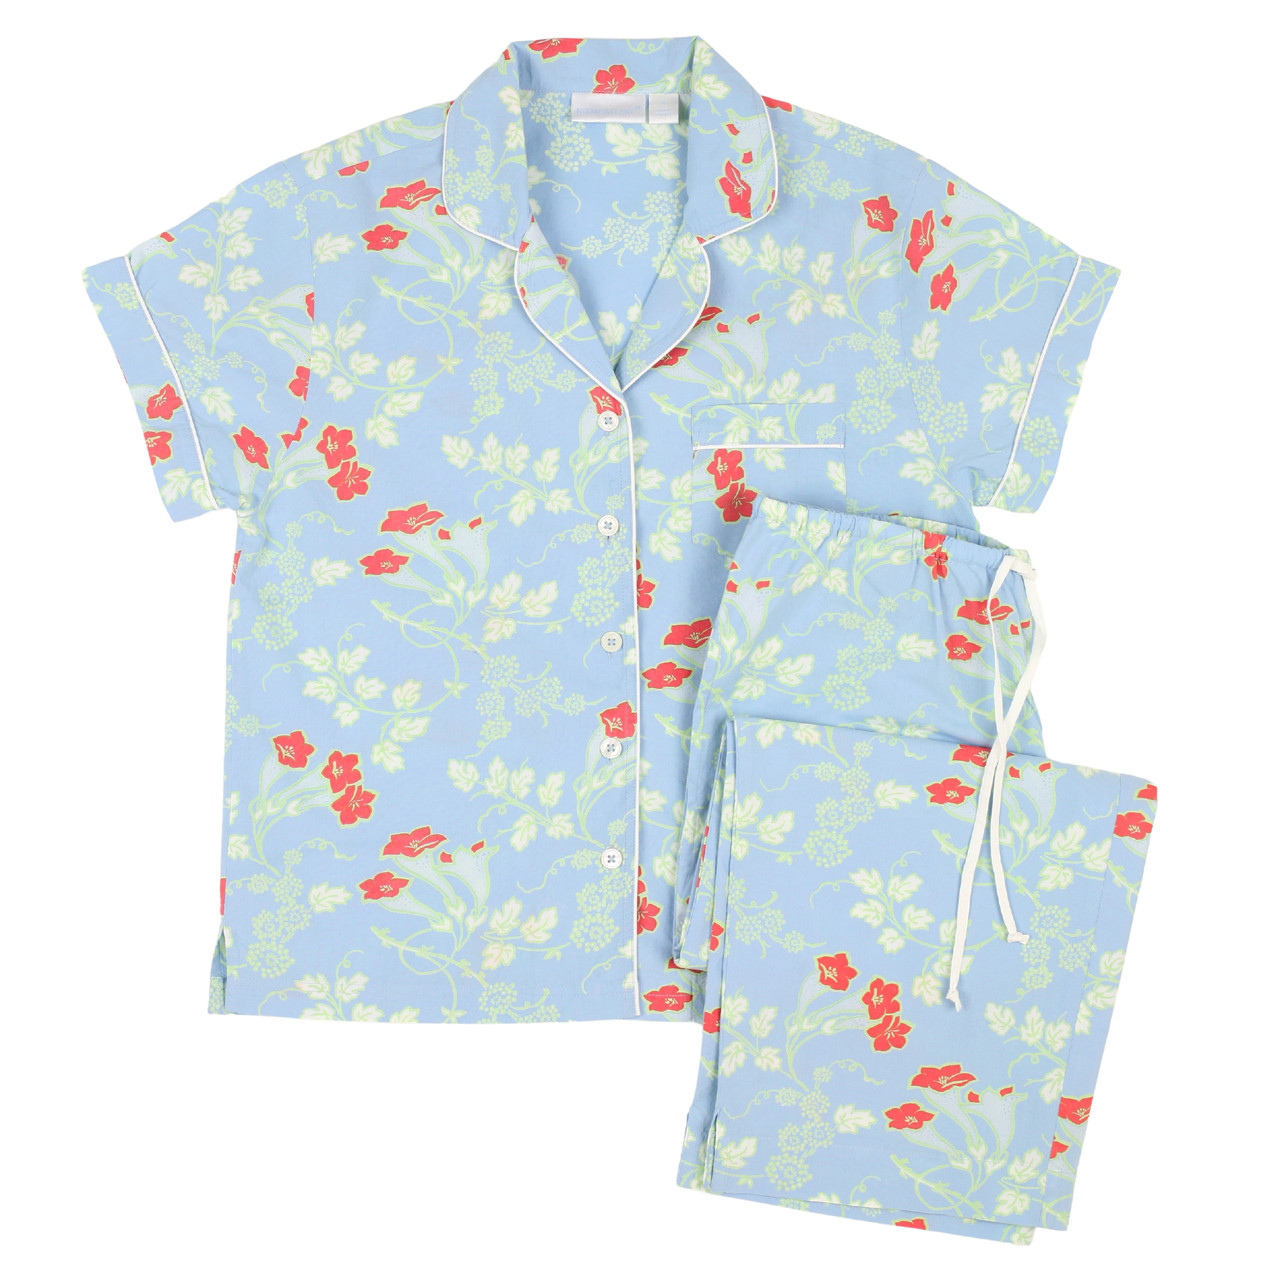 BULK BUY - Women's Peached Jersey Knit Capri Pajama Set with